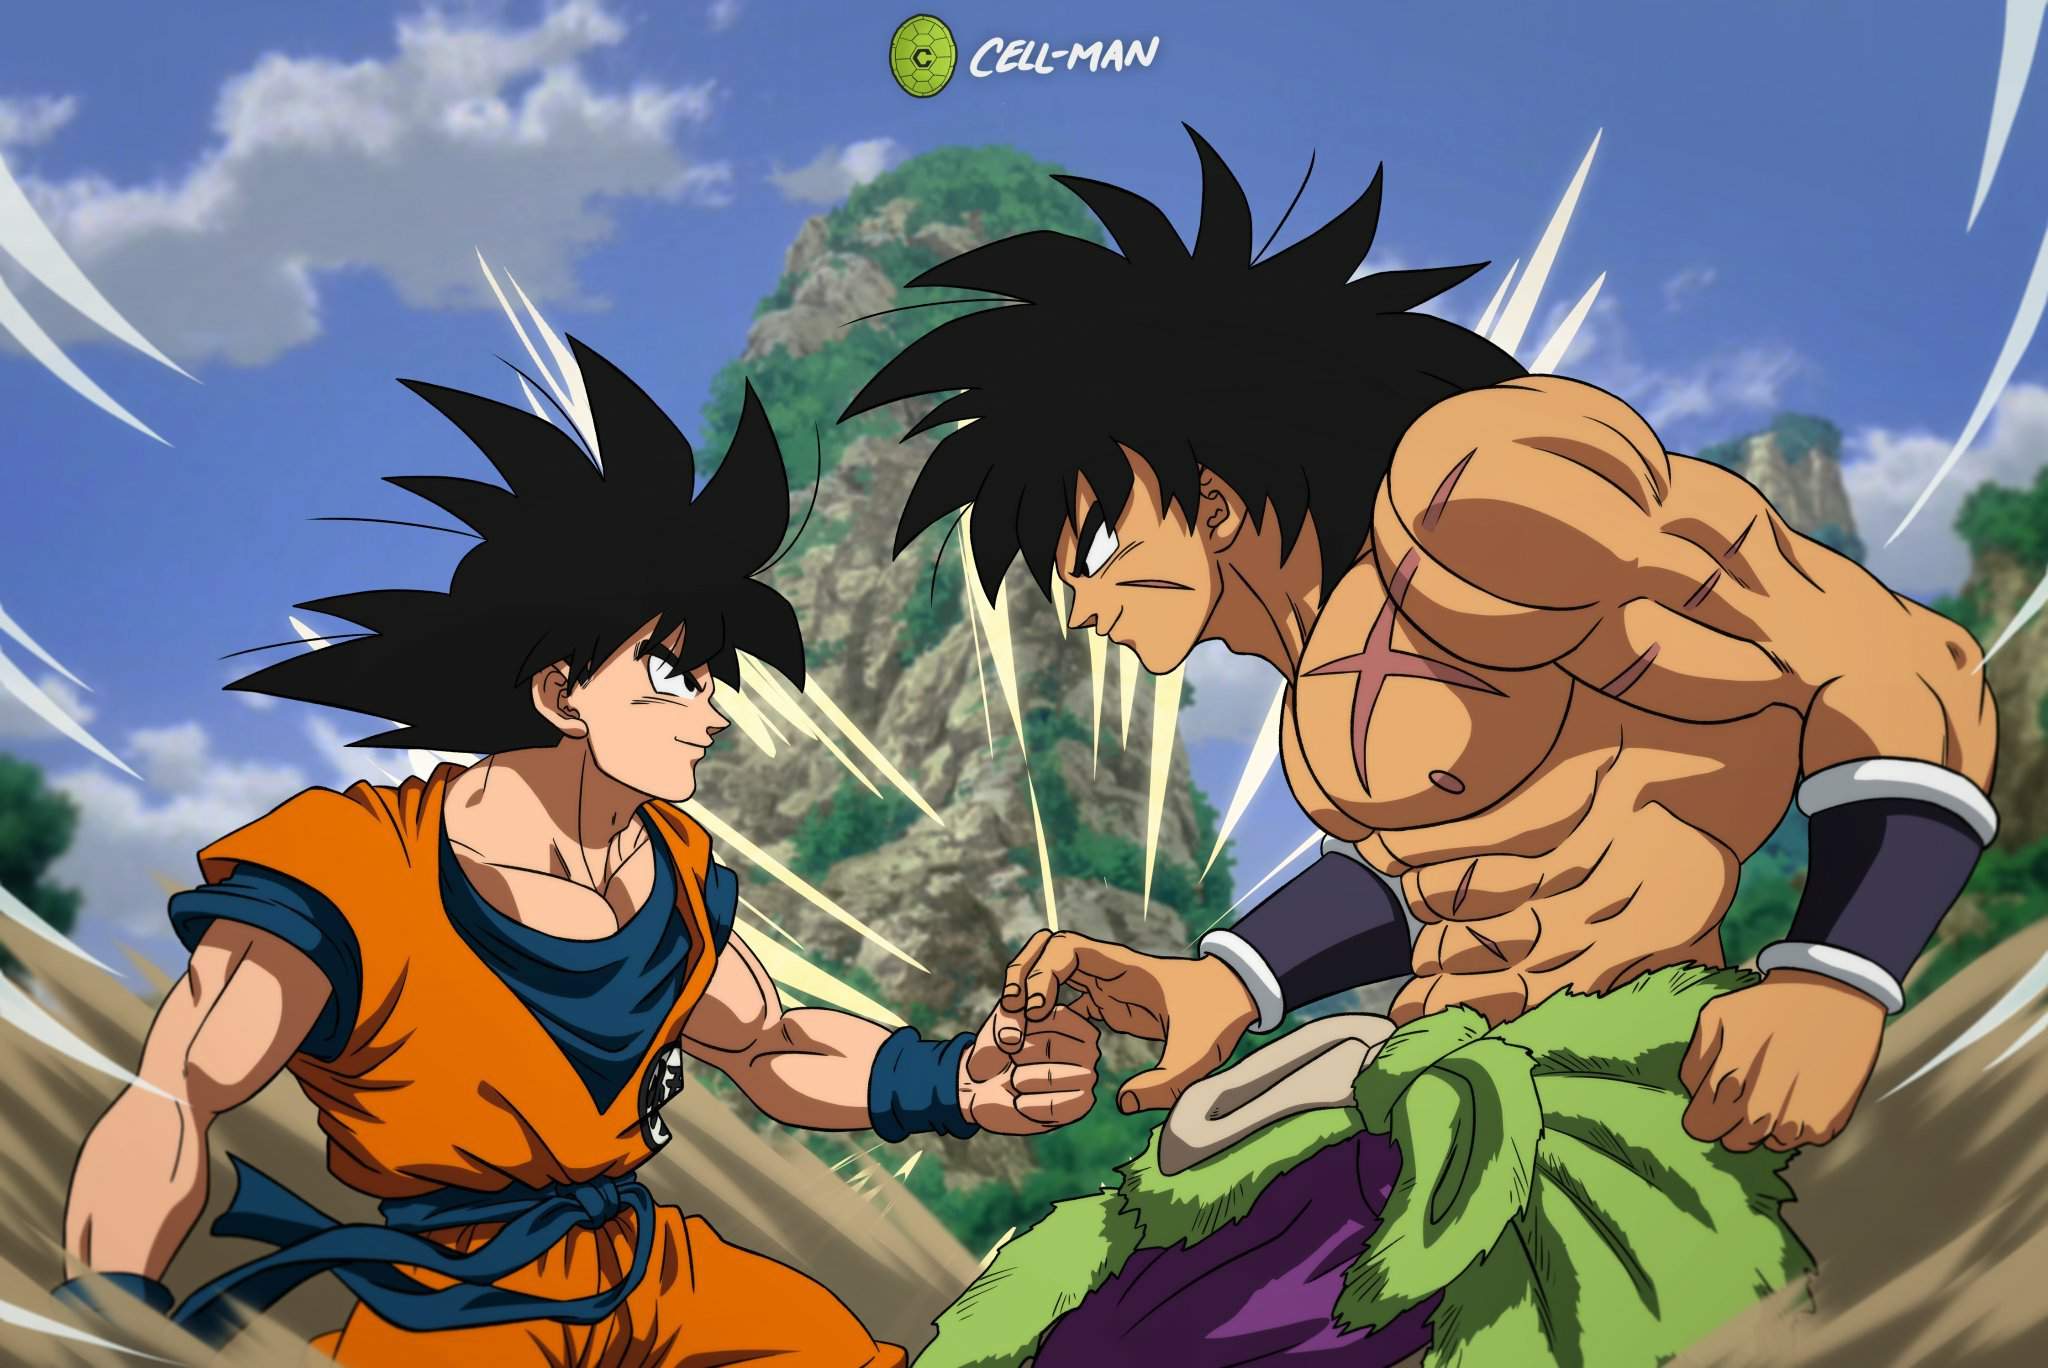 Goku vs Broly imágenes épicas!!! | DRAGON BALL ESPAÑOL Amino